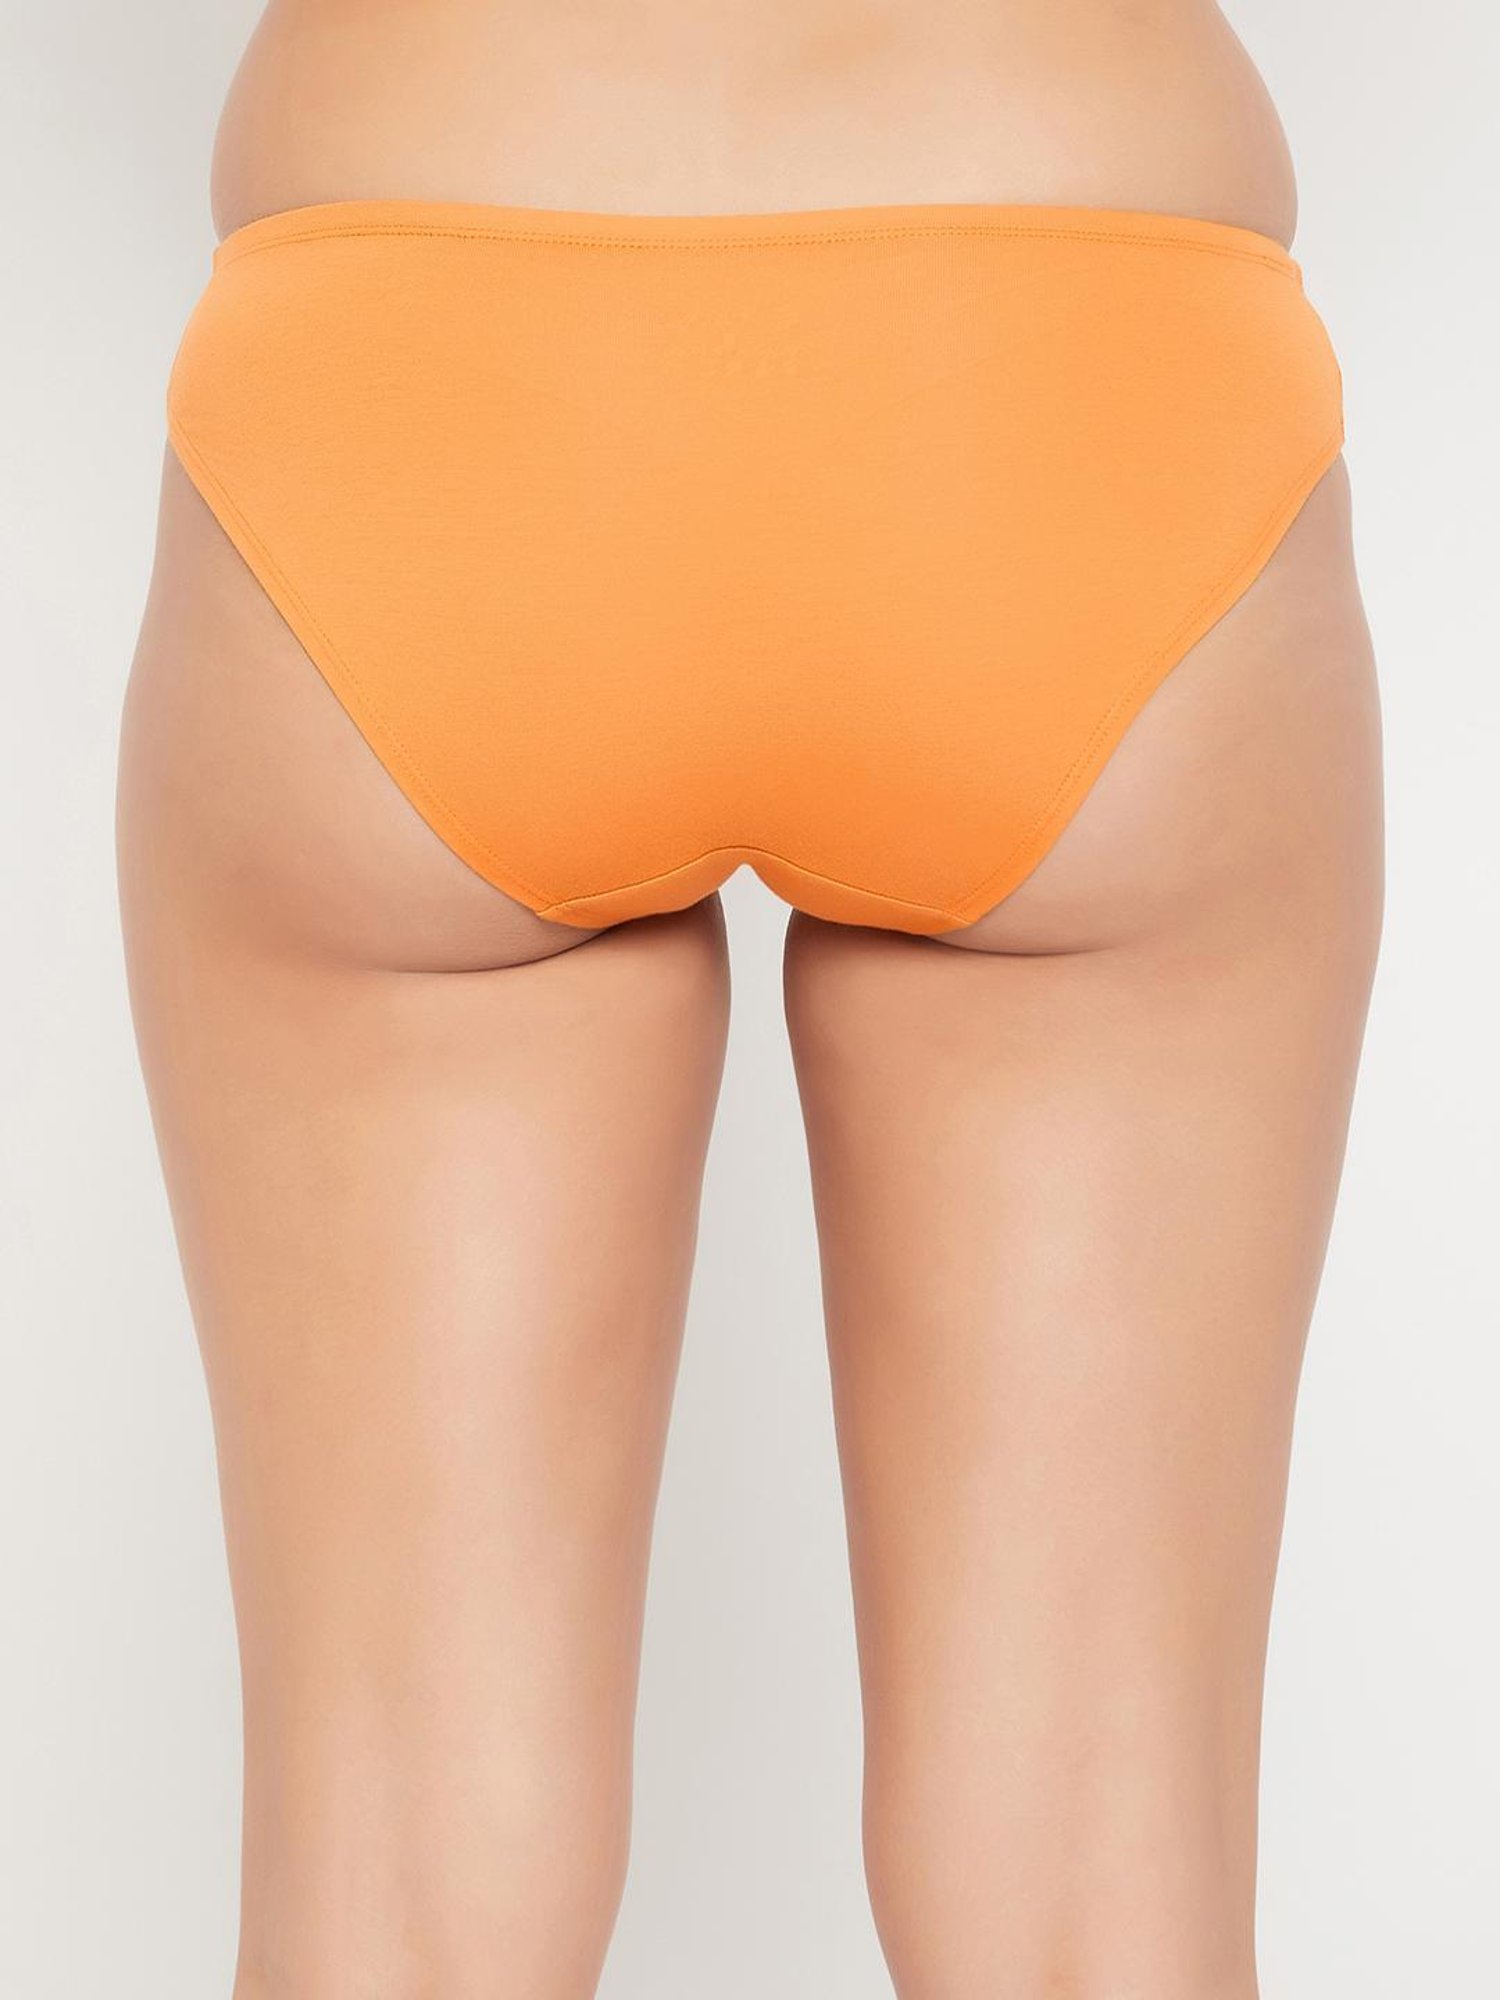 Buy Low Waist Bikini Panty in Orange - Cotton Online India, Best Prices,  COD - Clovia - PN5032A16